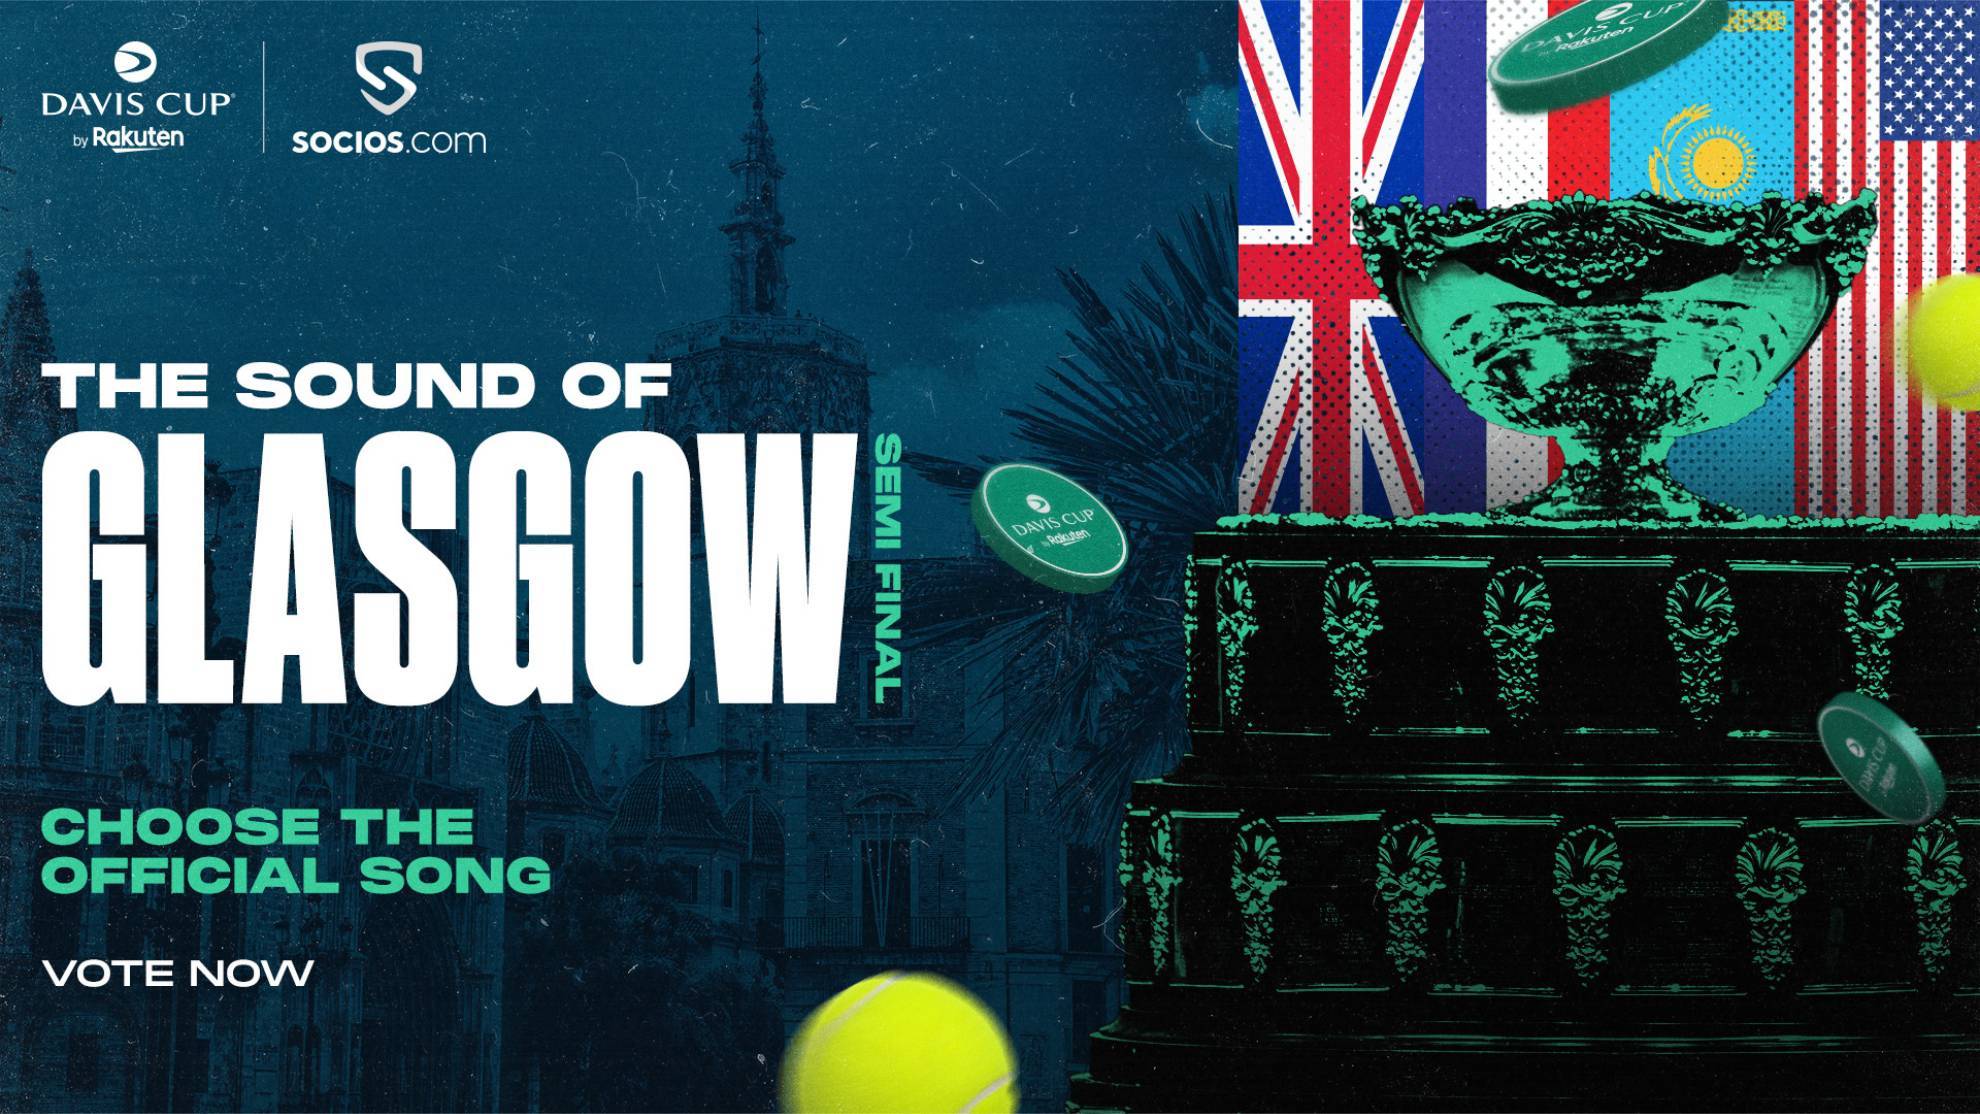 Select Davis Cup music with Socios.com